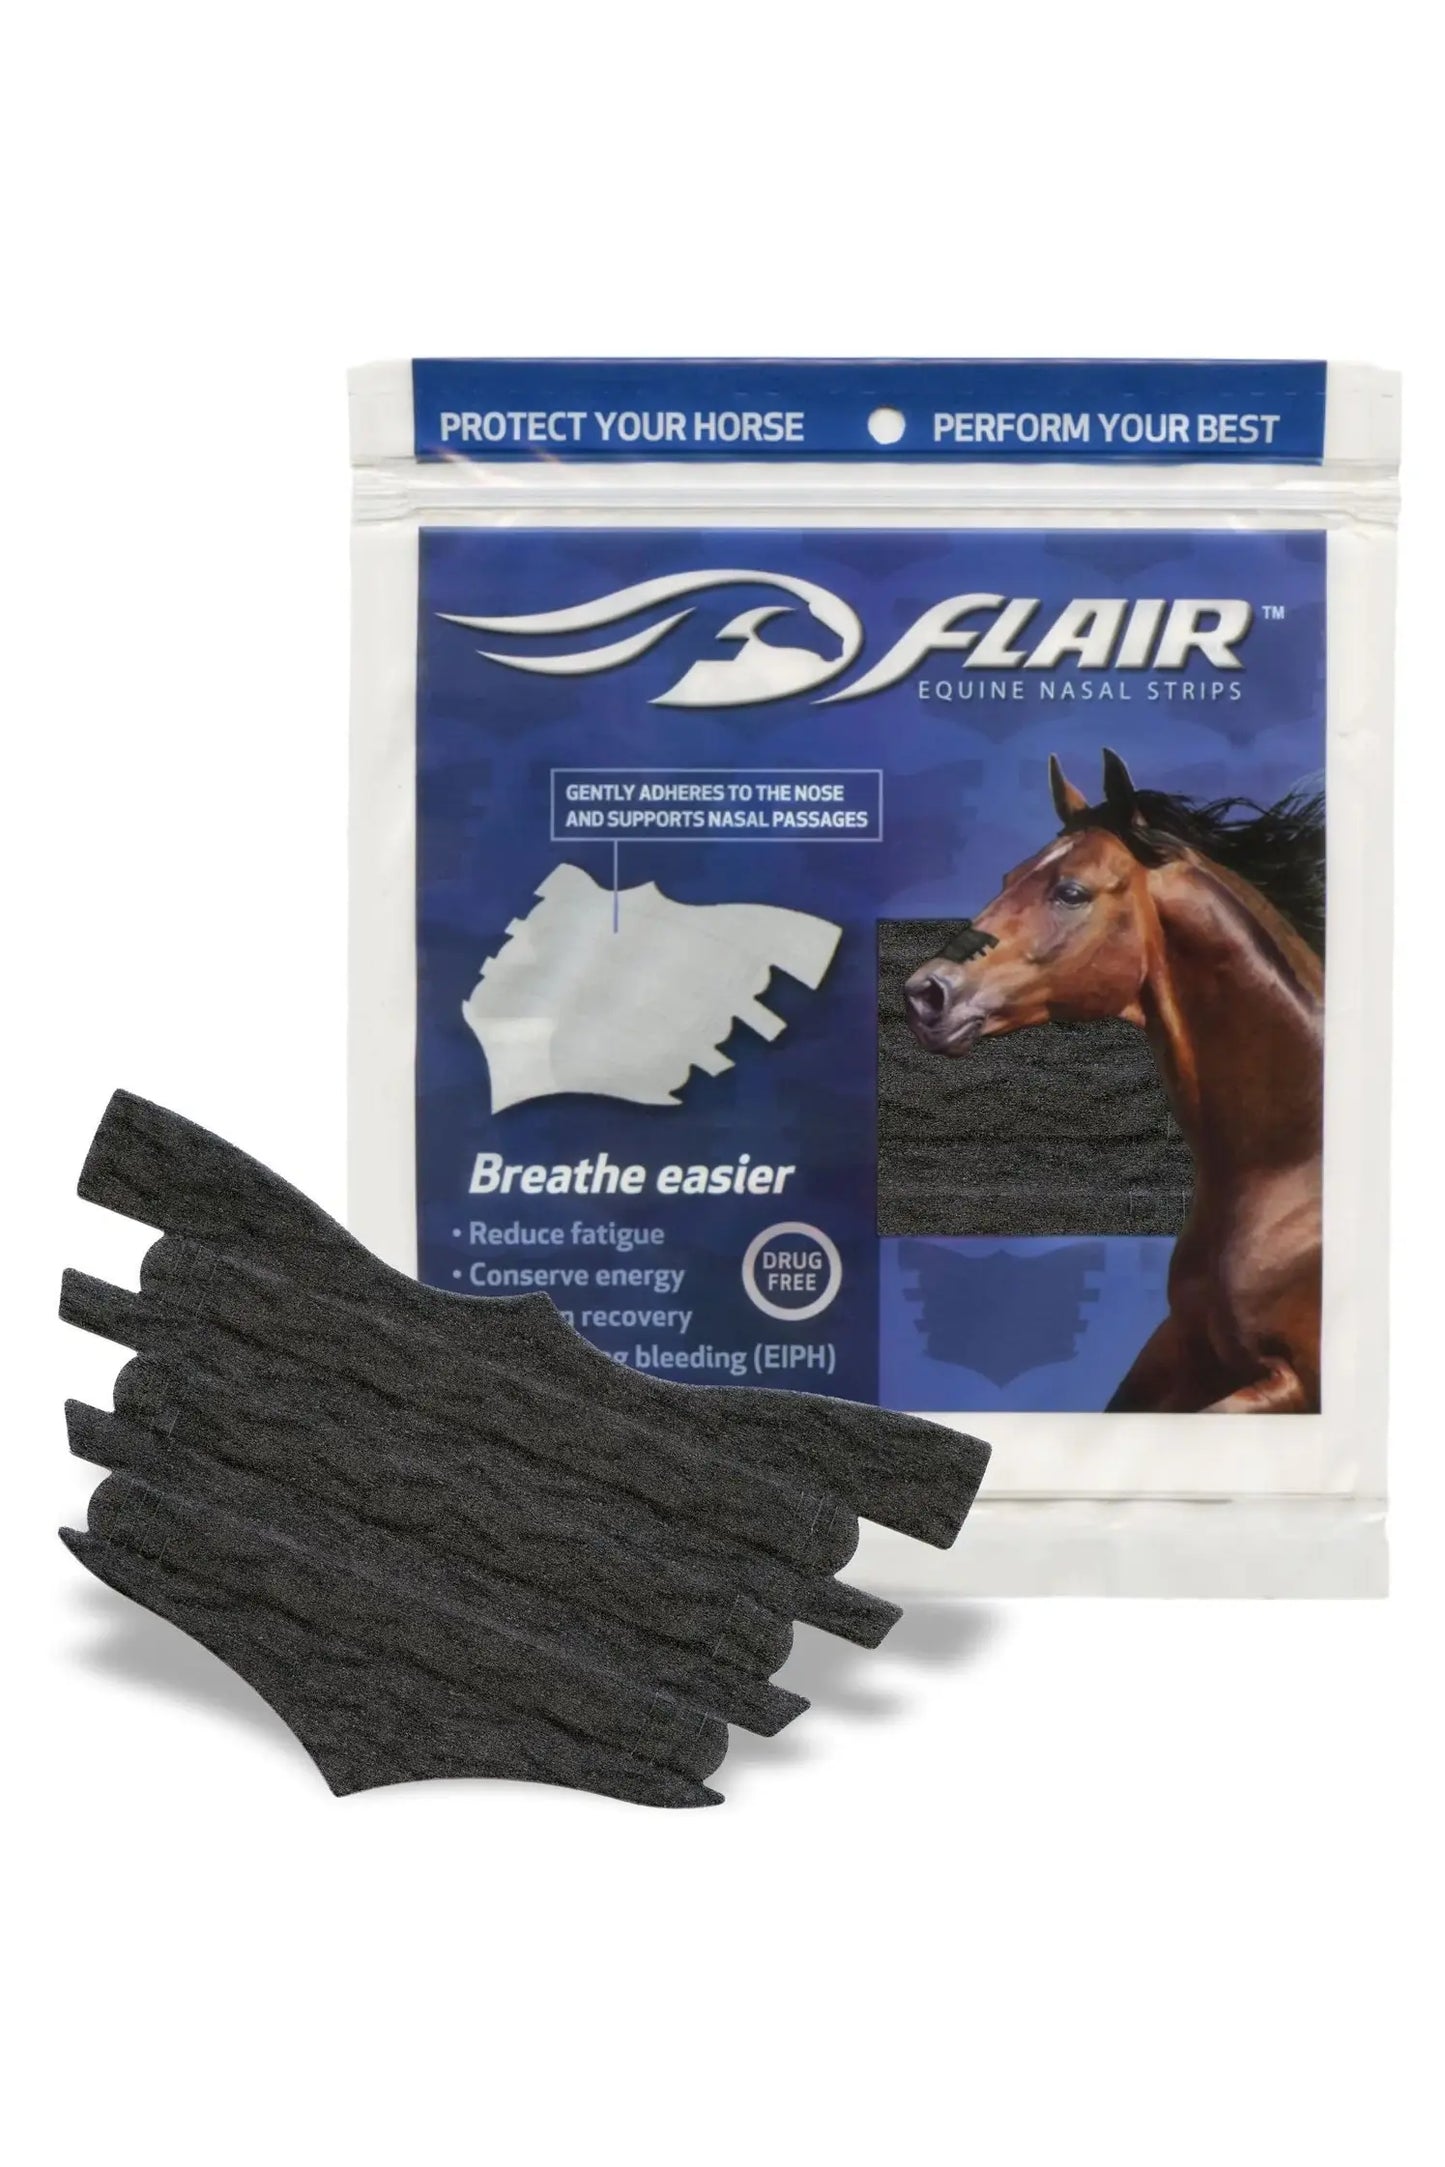 Flair Equine Nasal Strip